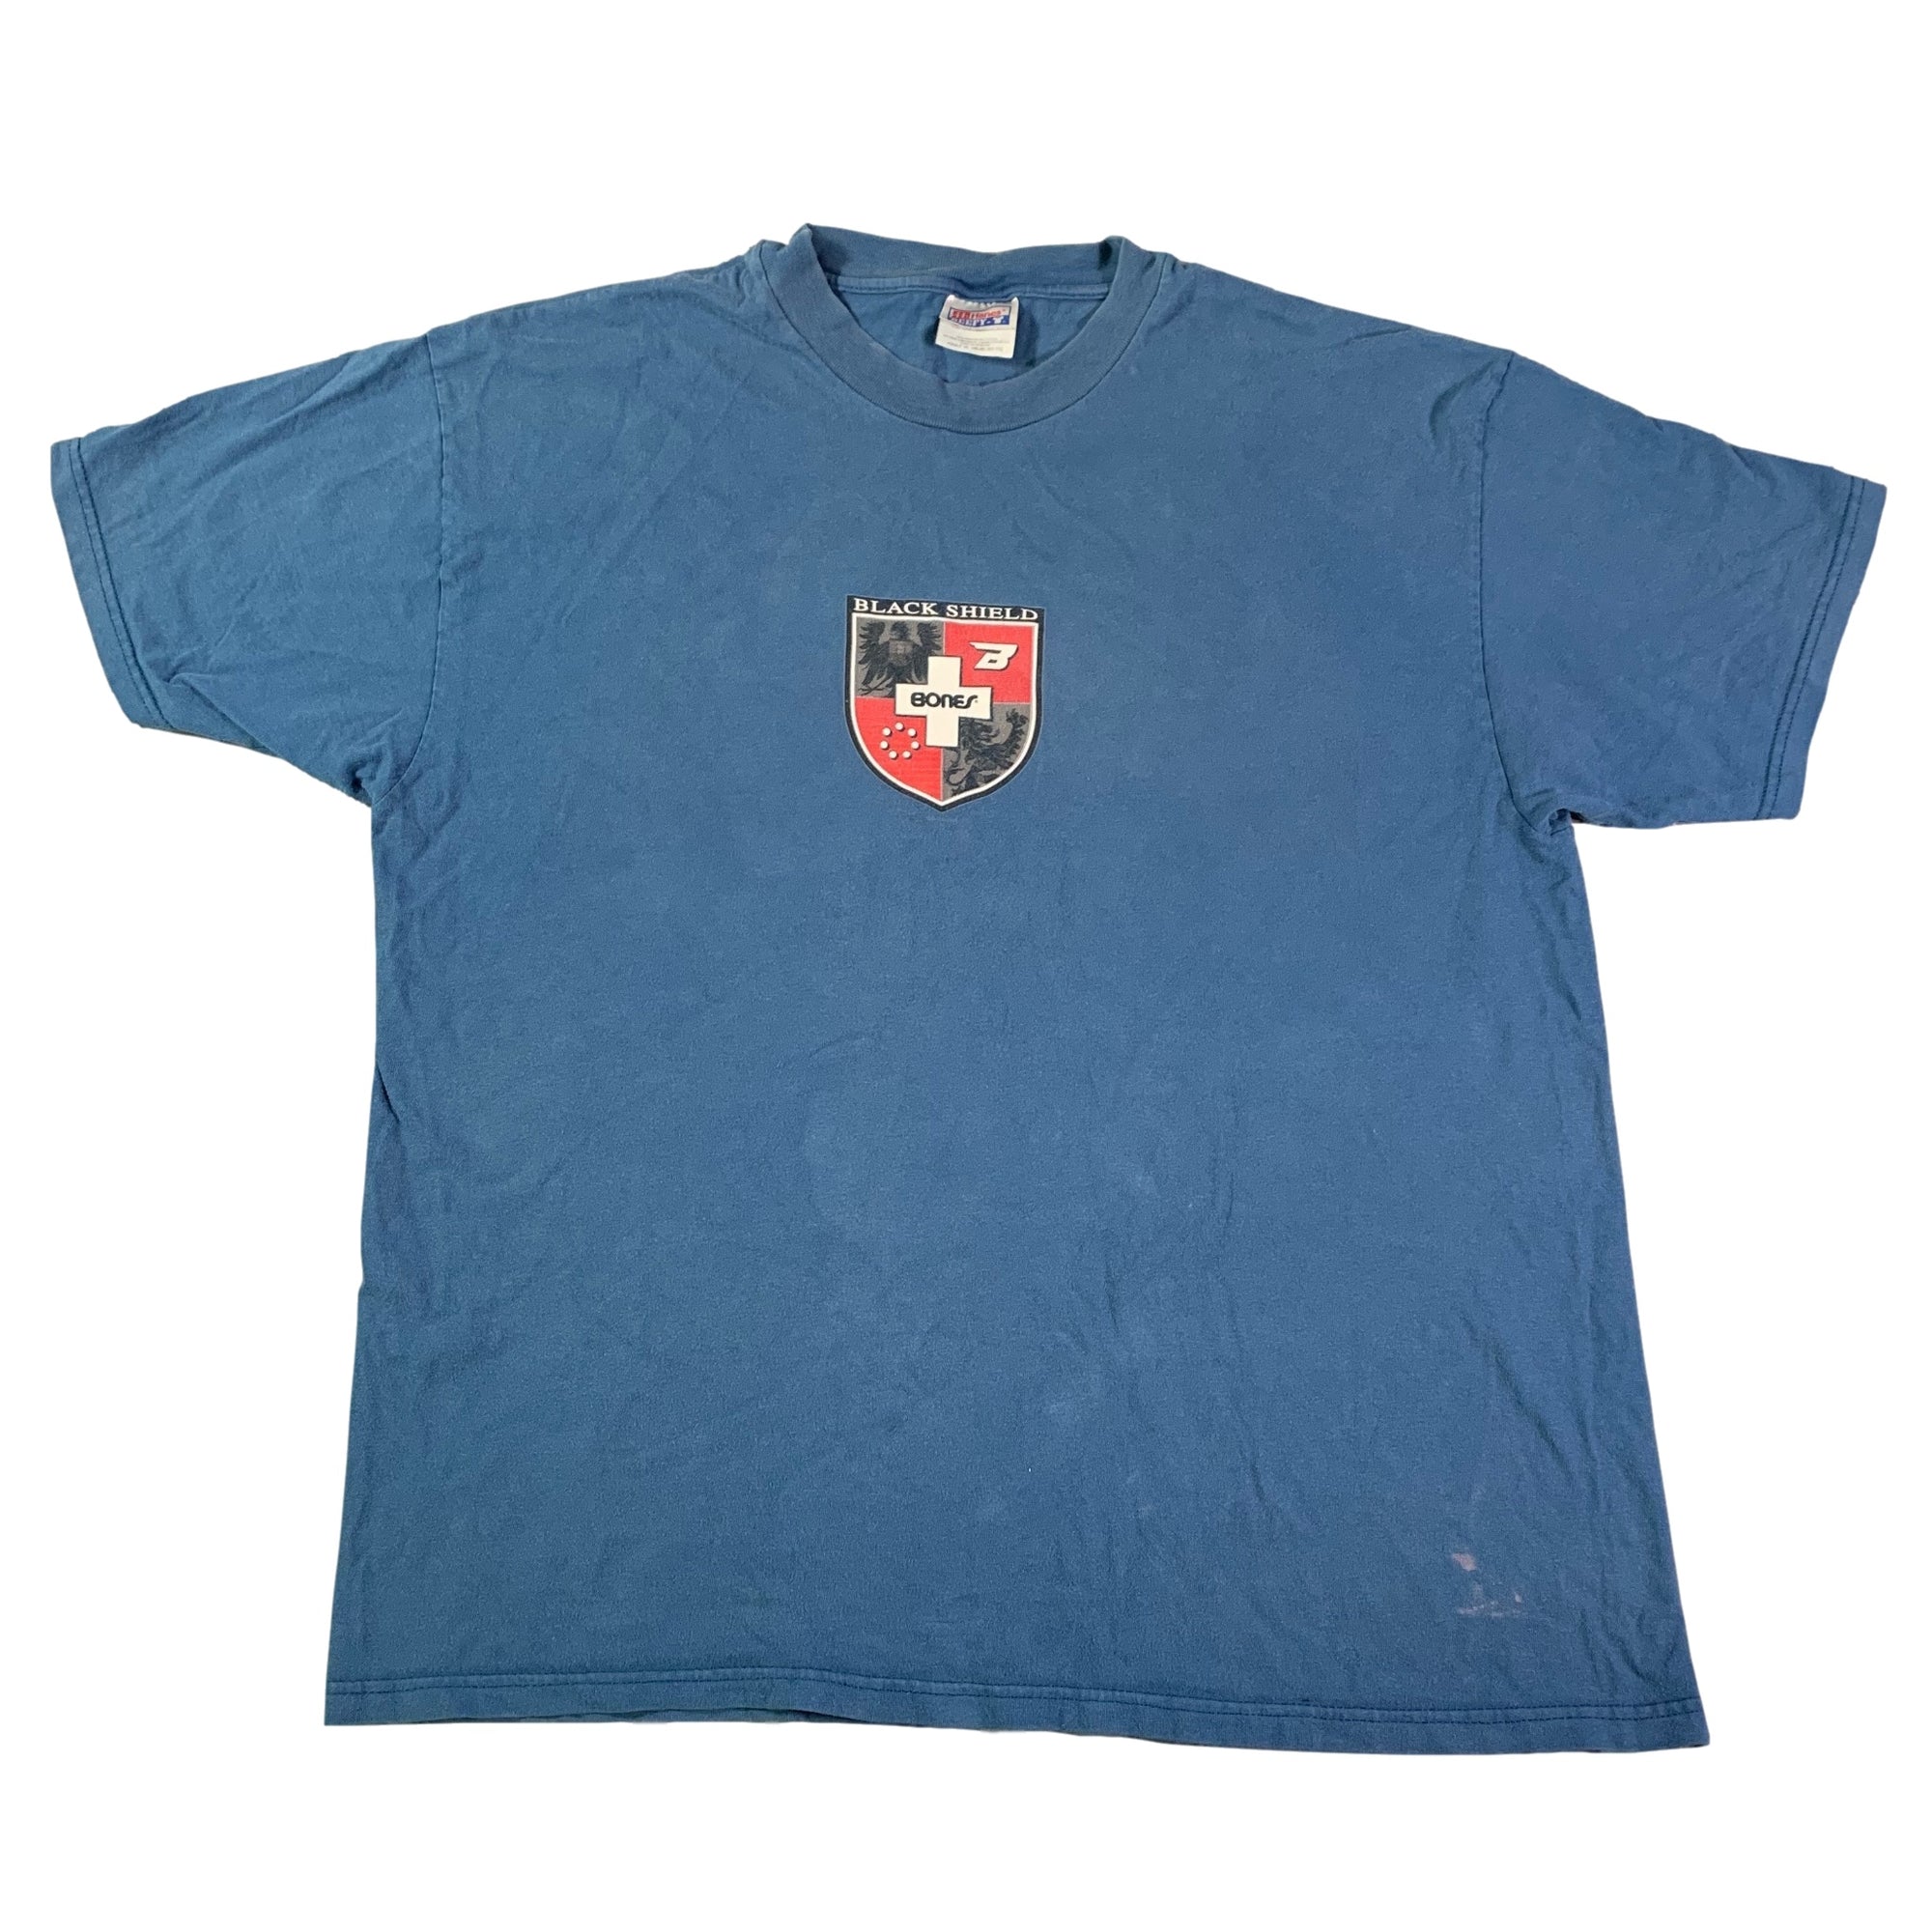 Vintage Bones Swiss "Black Shield" T-Shirt - jointcustodydc